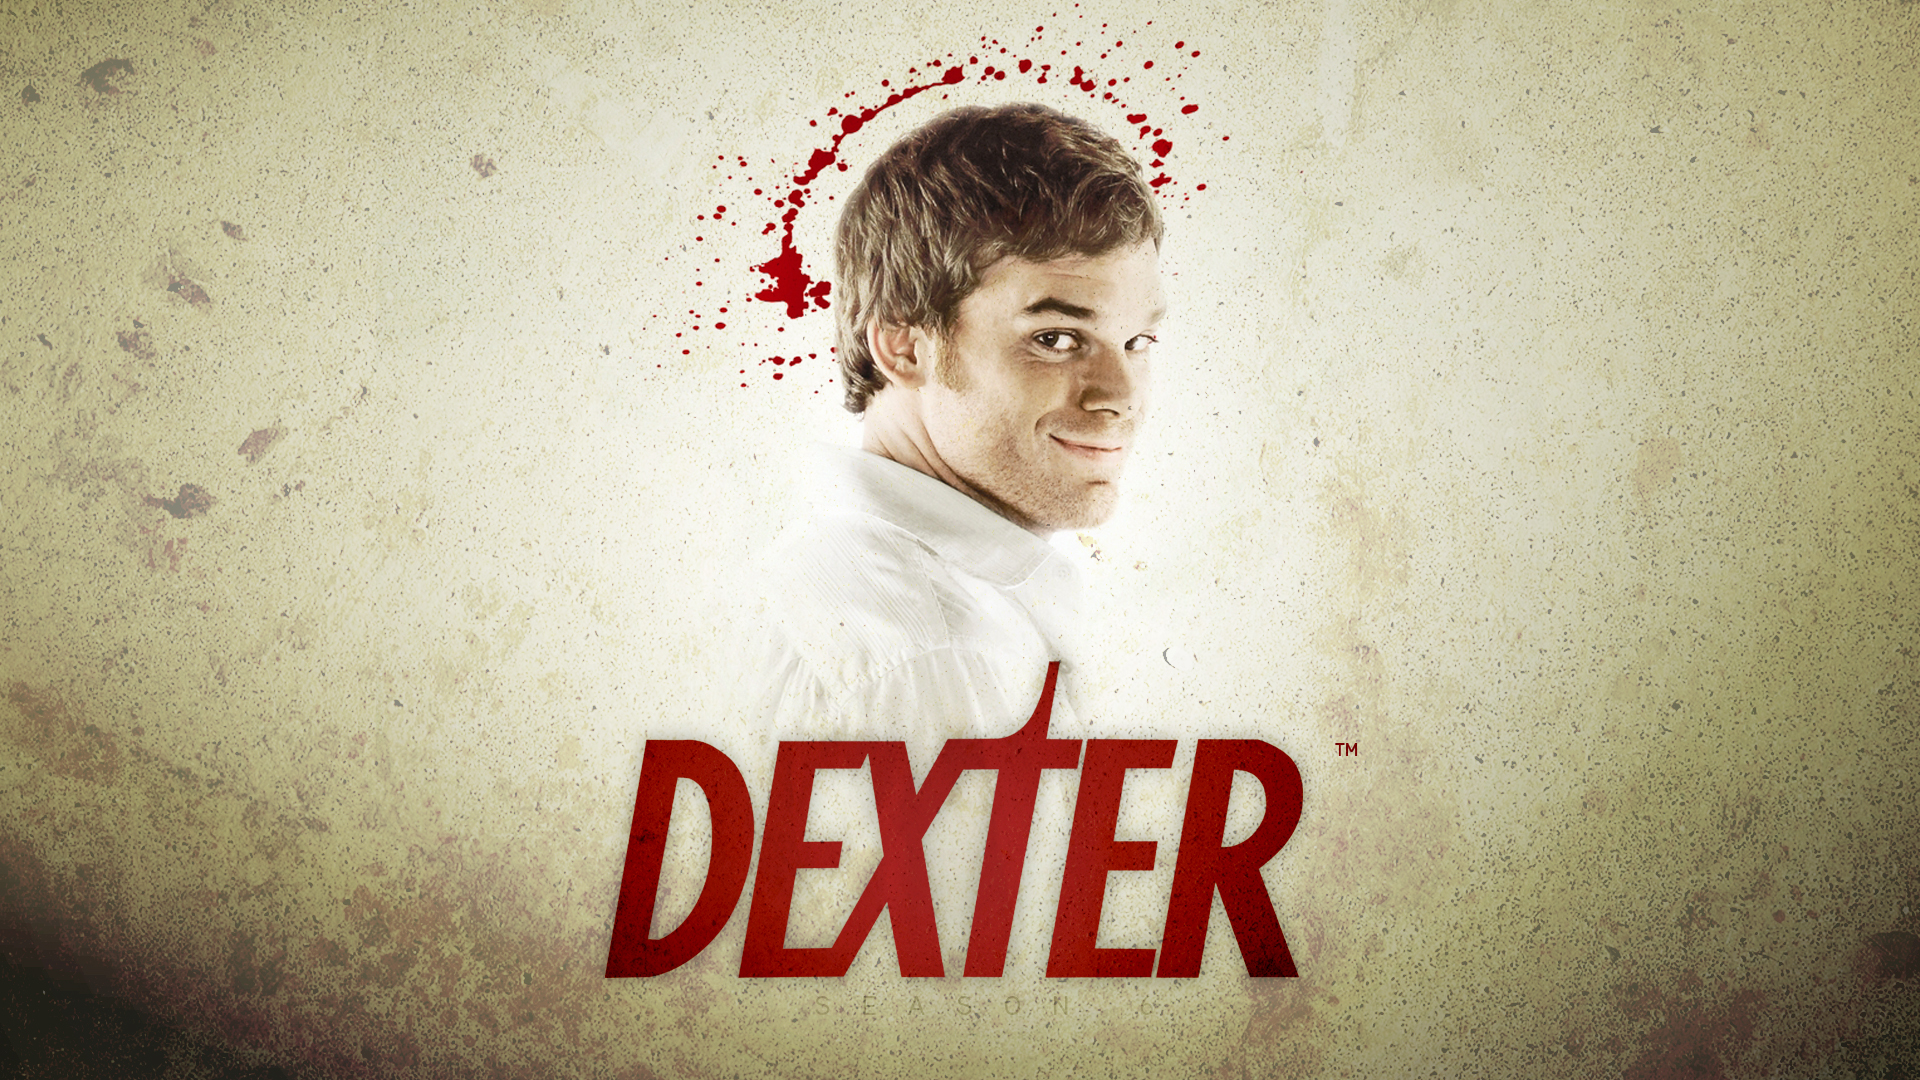 Dexter wallpaper android